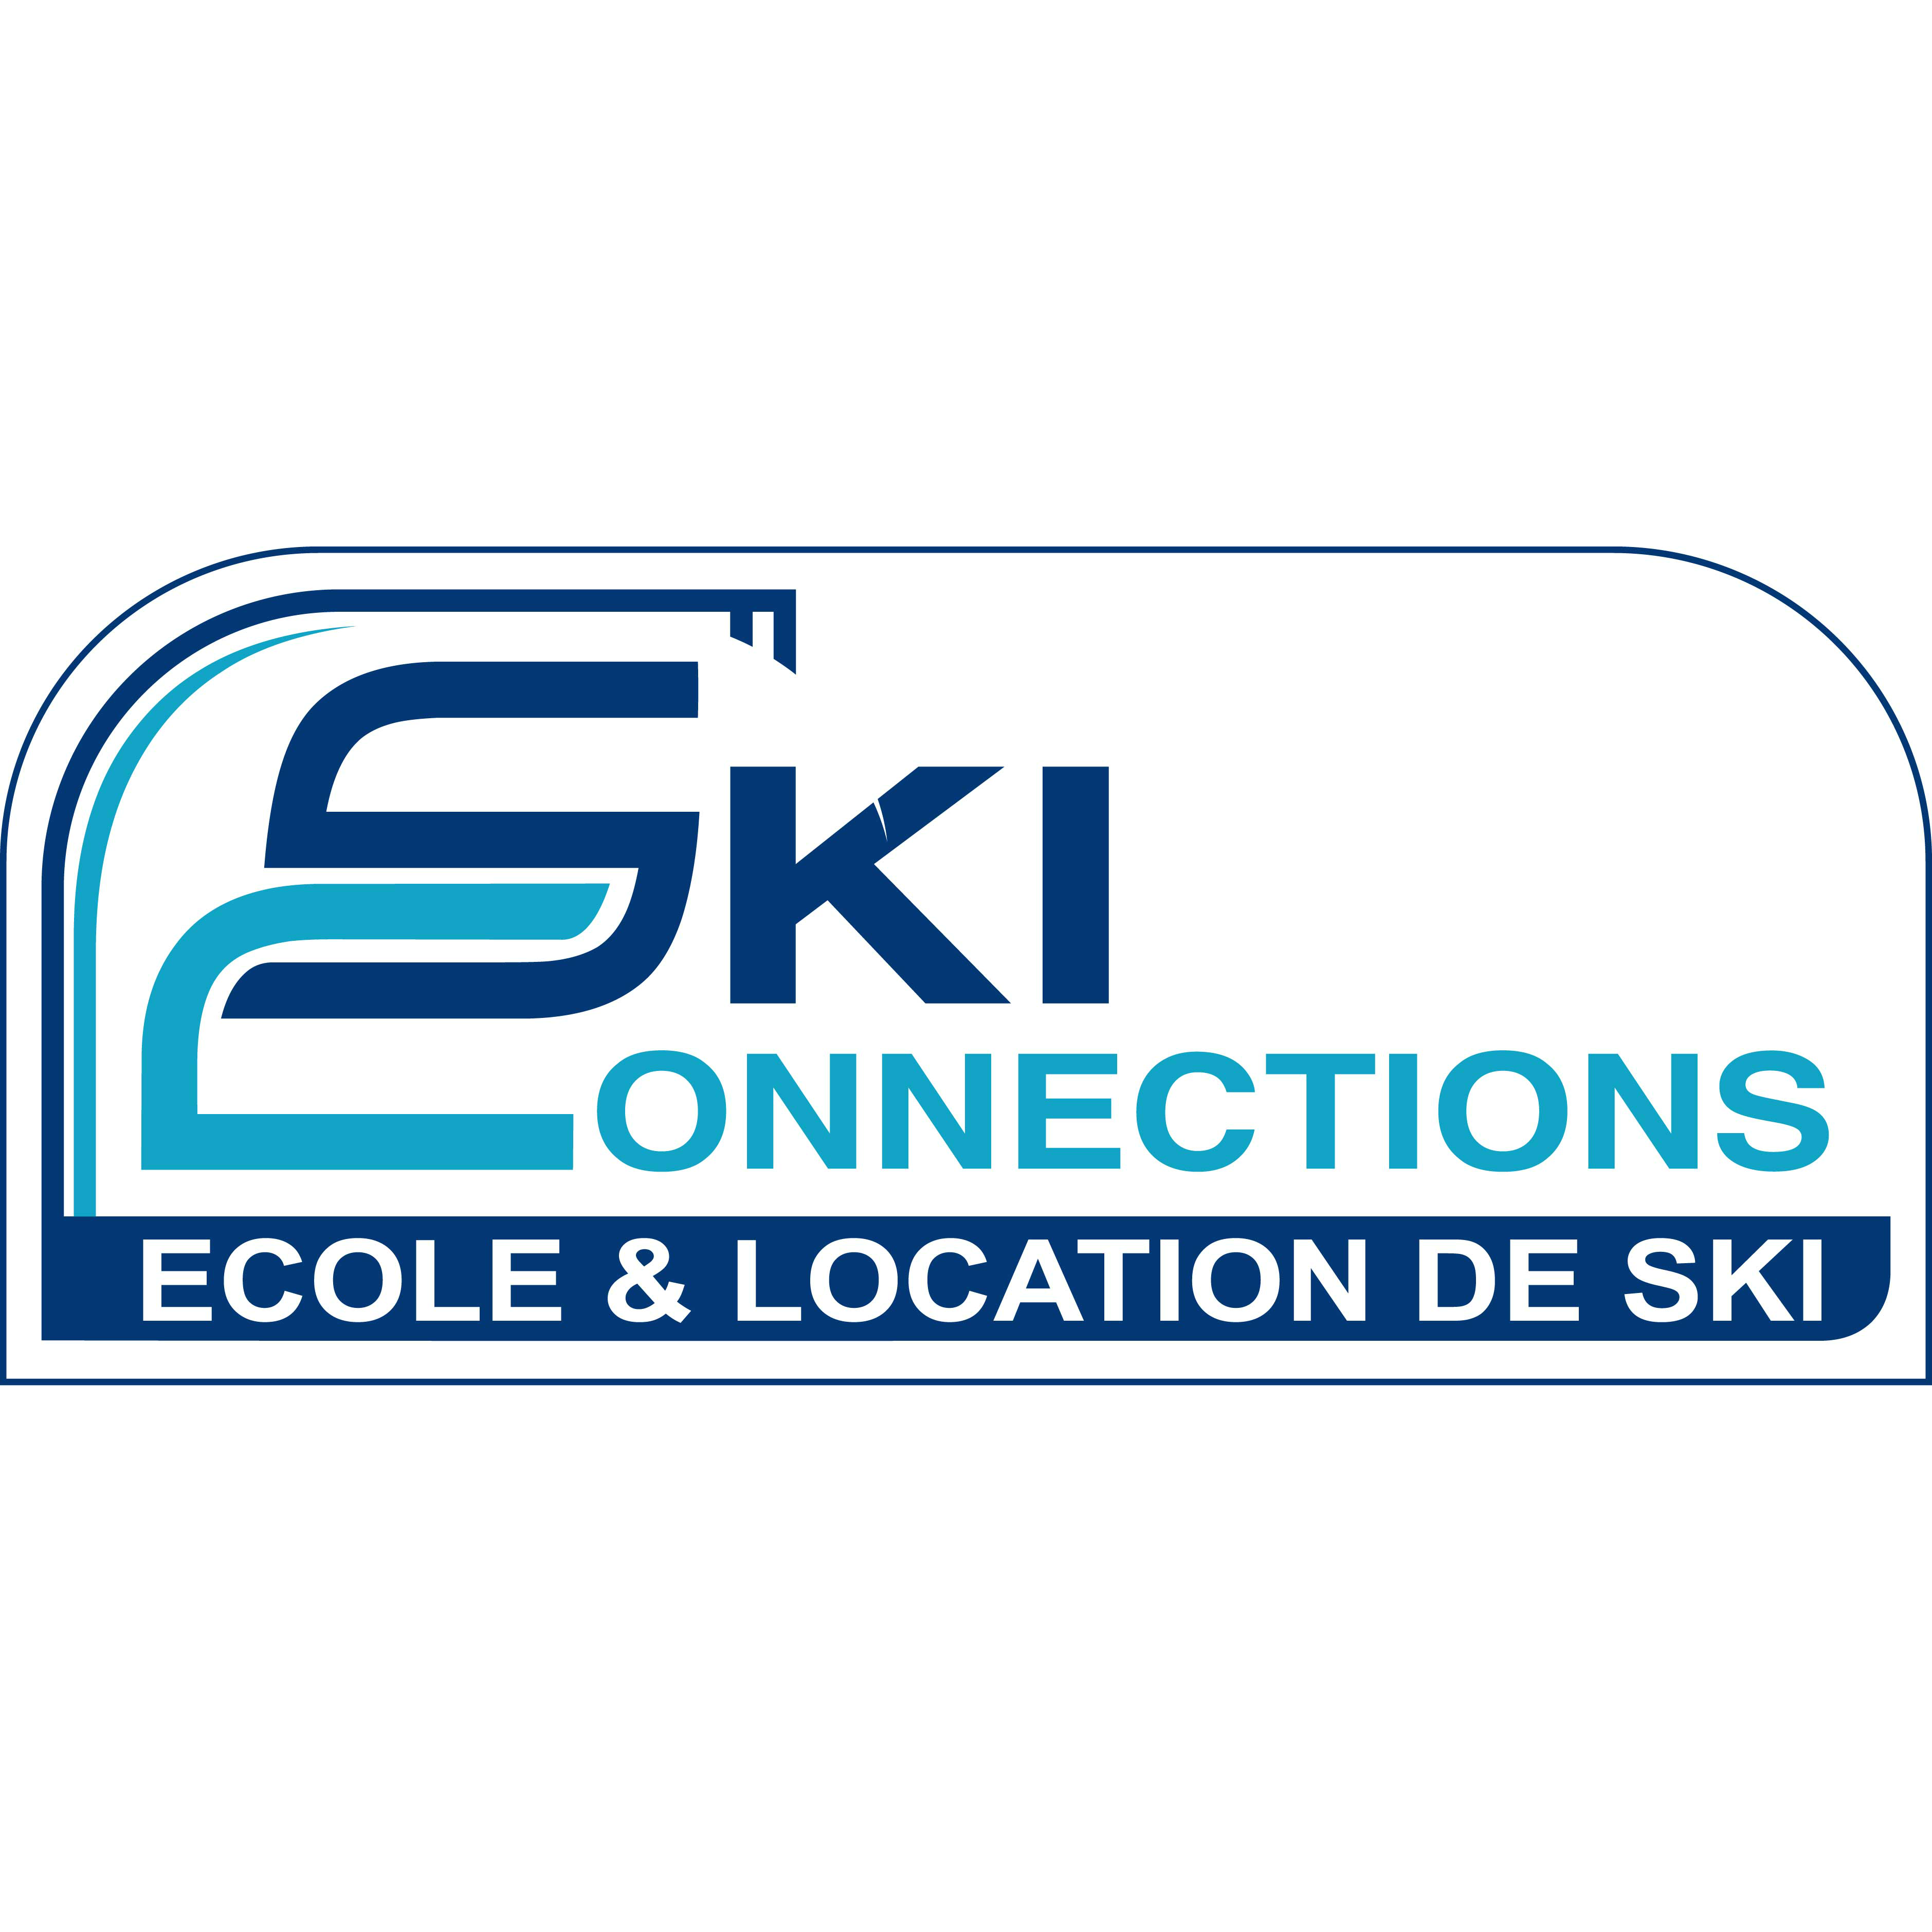 Ski Connections Serre Chevalier